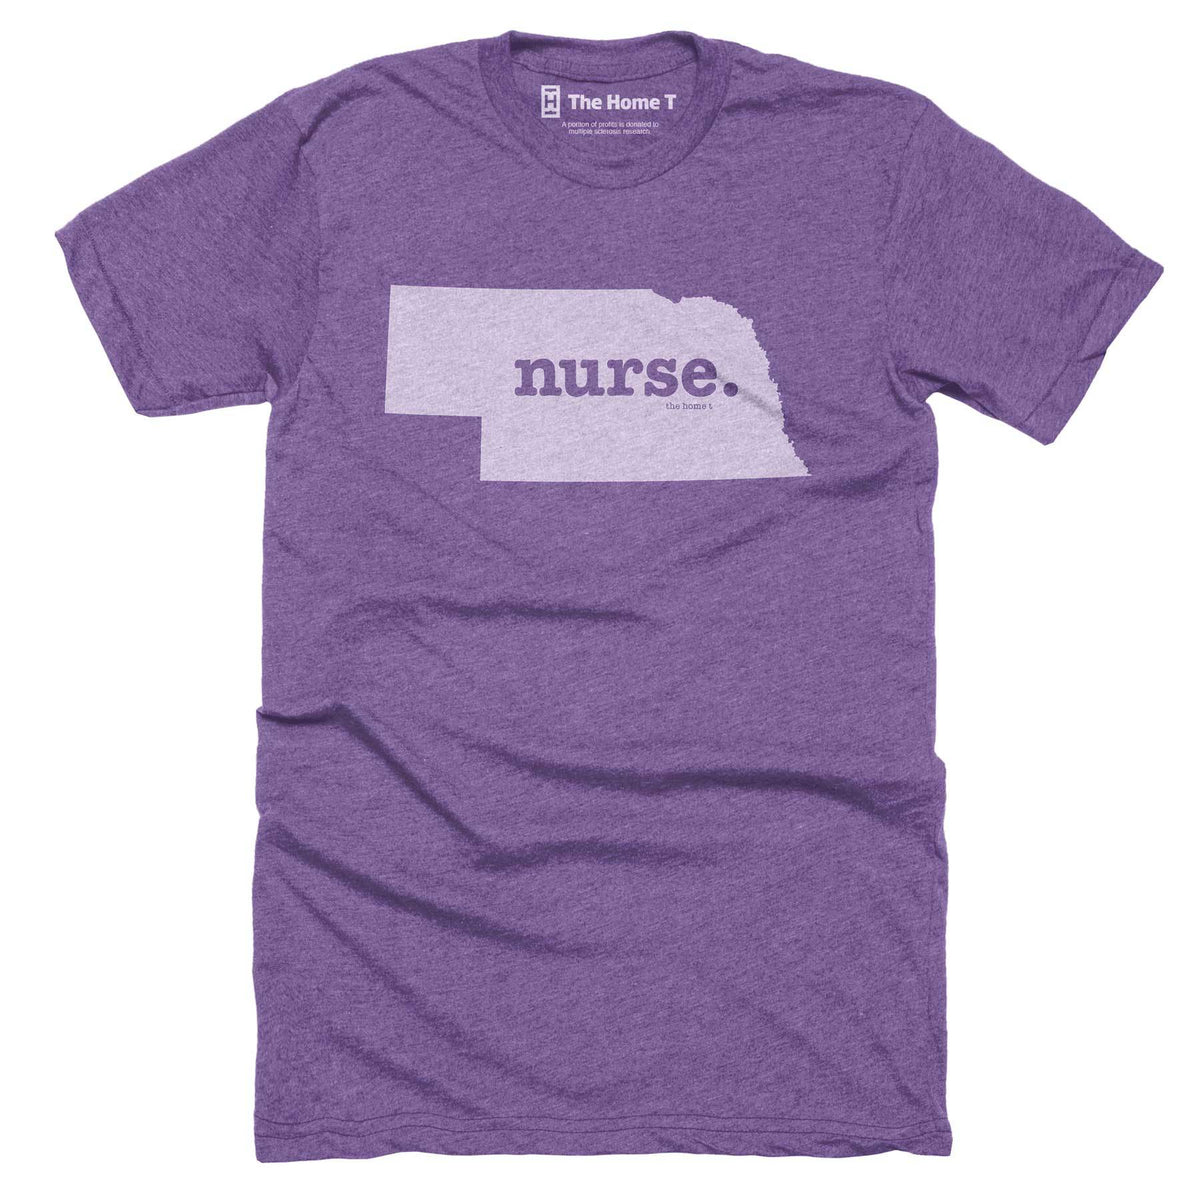 Nebraska Nurse Home T-Shirt Occupation The Home T